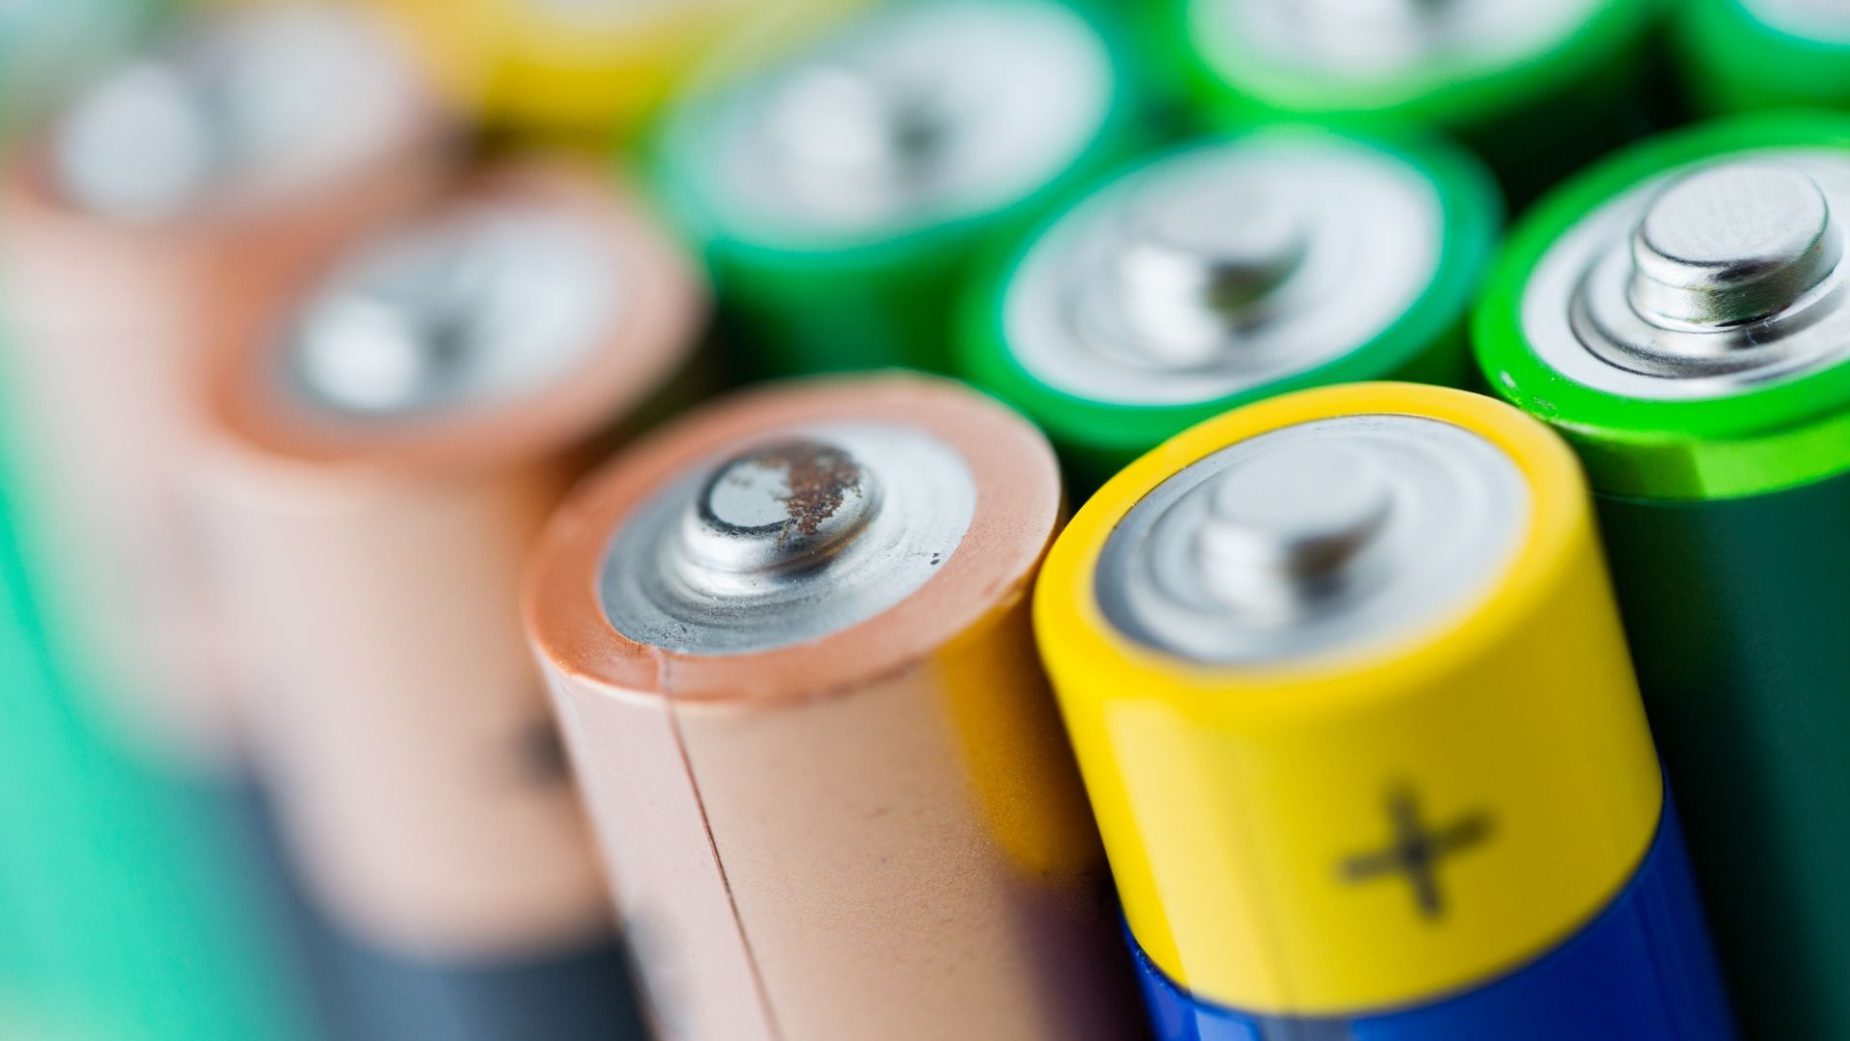 Alkaline Primary Batteries Market